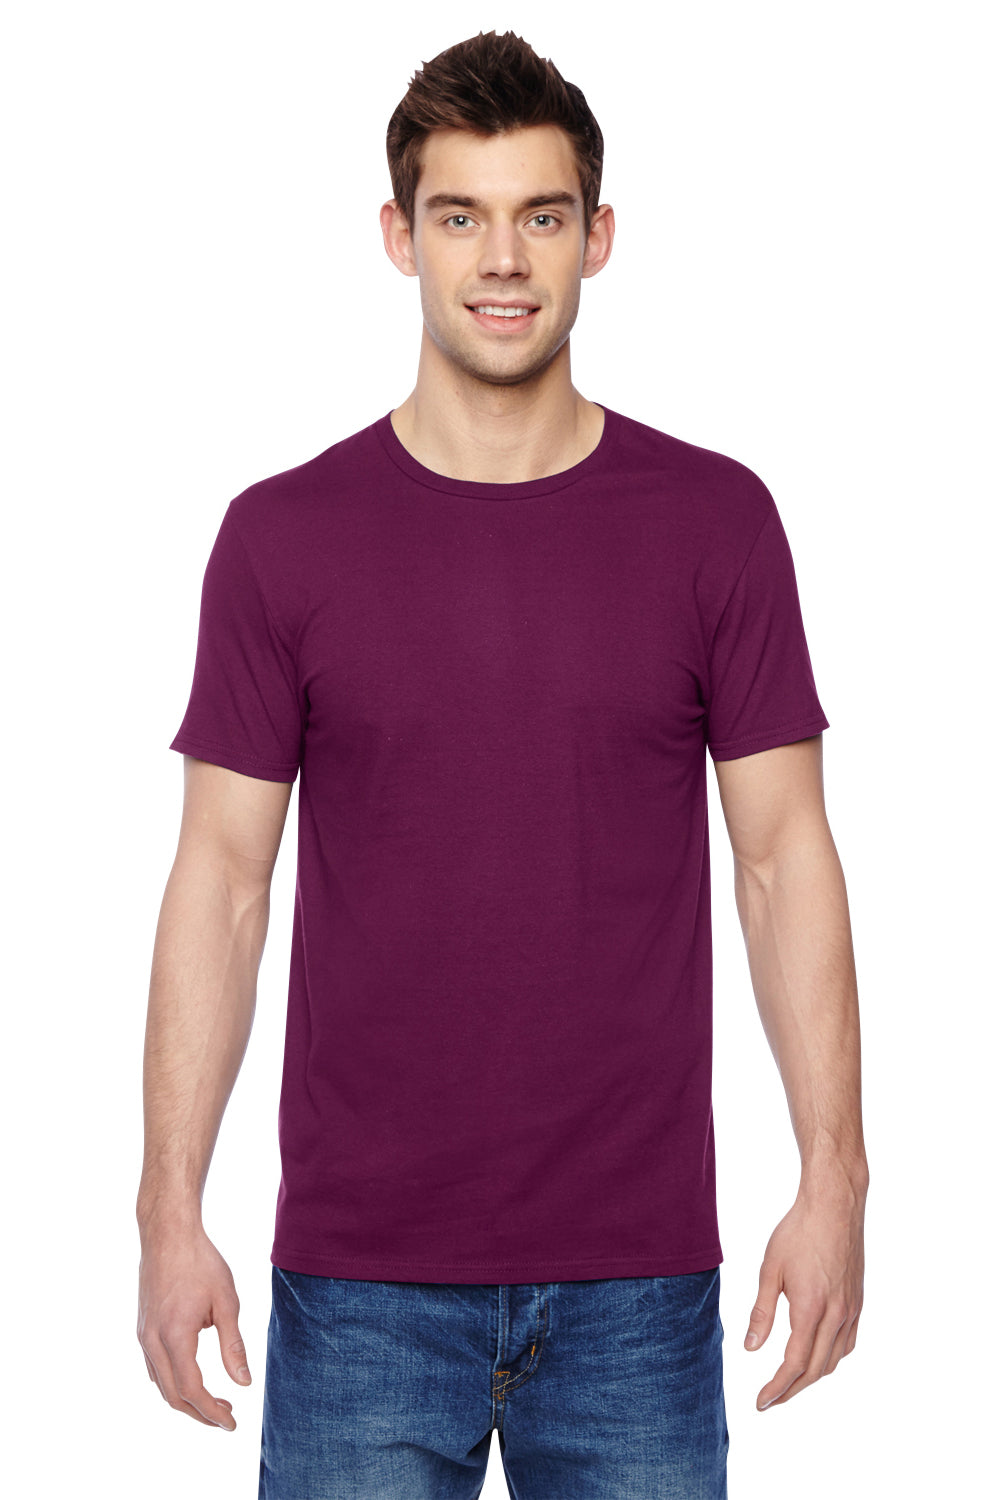 Fruit Of The Loom SF45R Mens Sofspun Jersey Short Sleeve Crewneck T-Shirt Wild Plum Purple Front